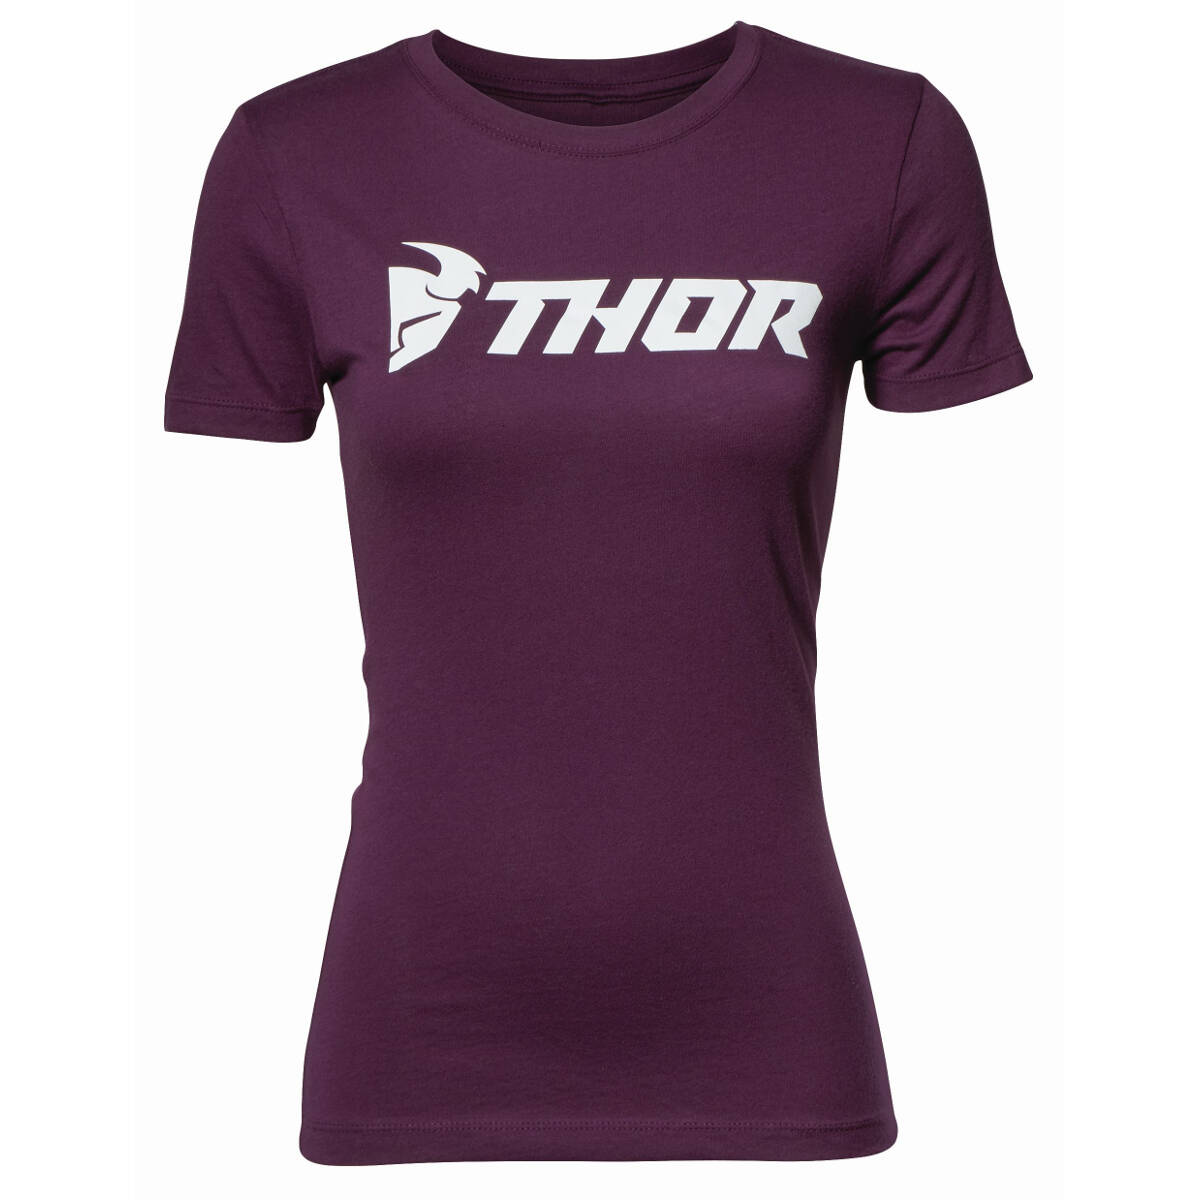 Thor Femme T-Shirt Loud Plum